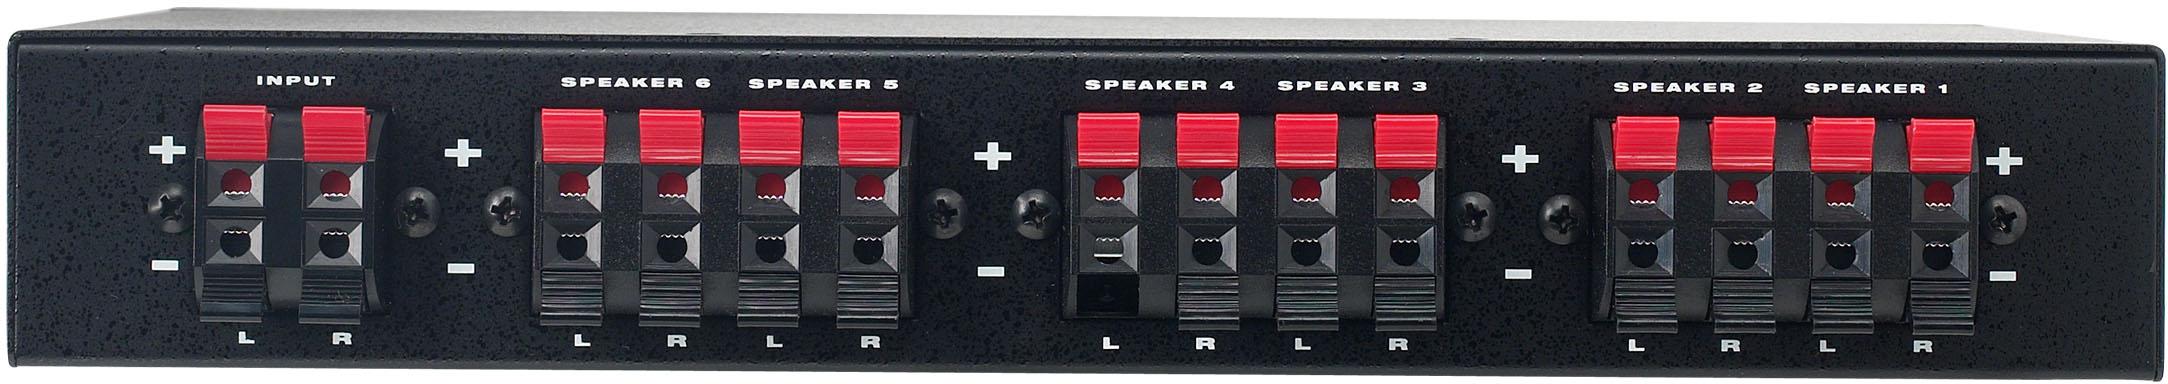 speaker selectors